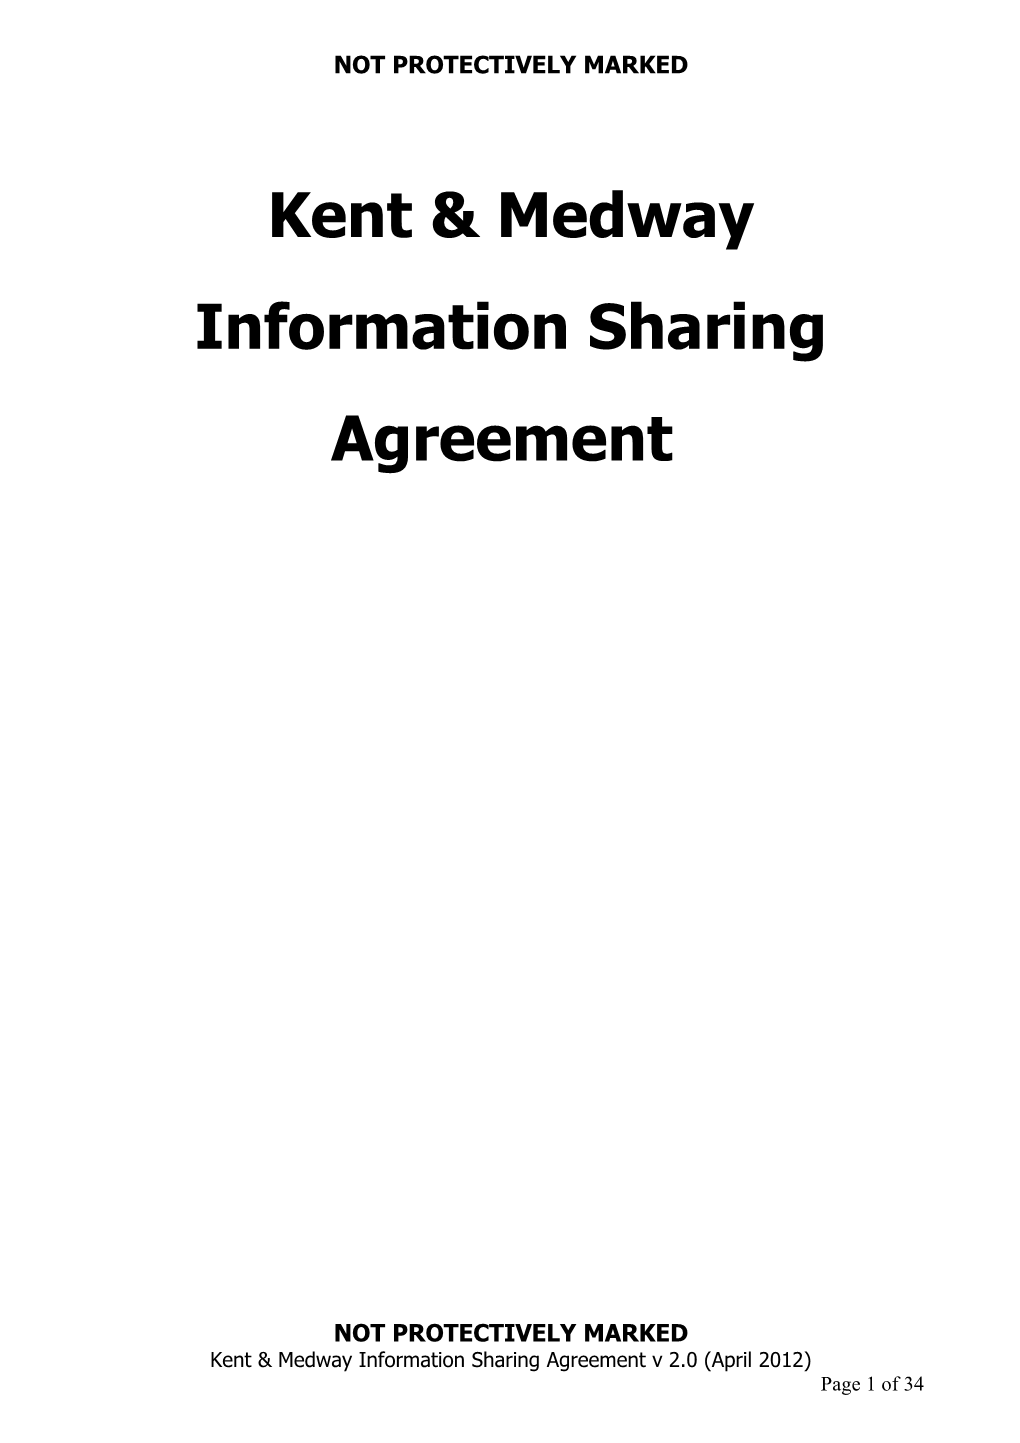 Information Sharing Agreement